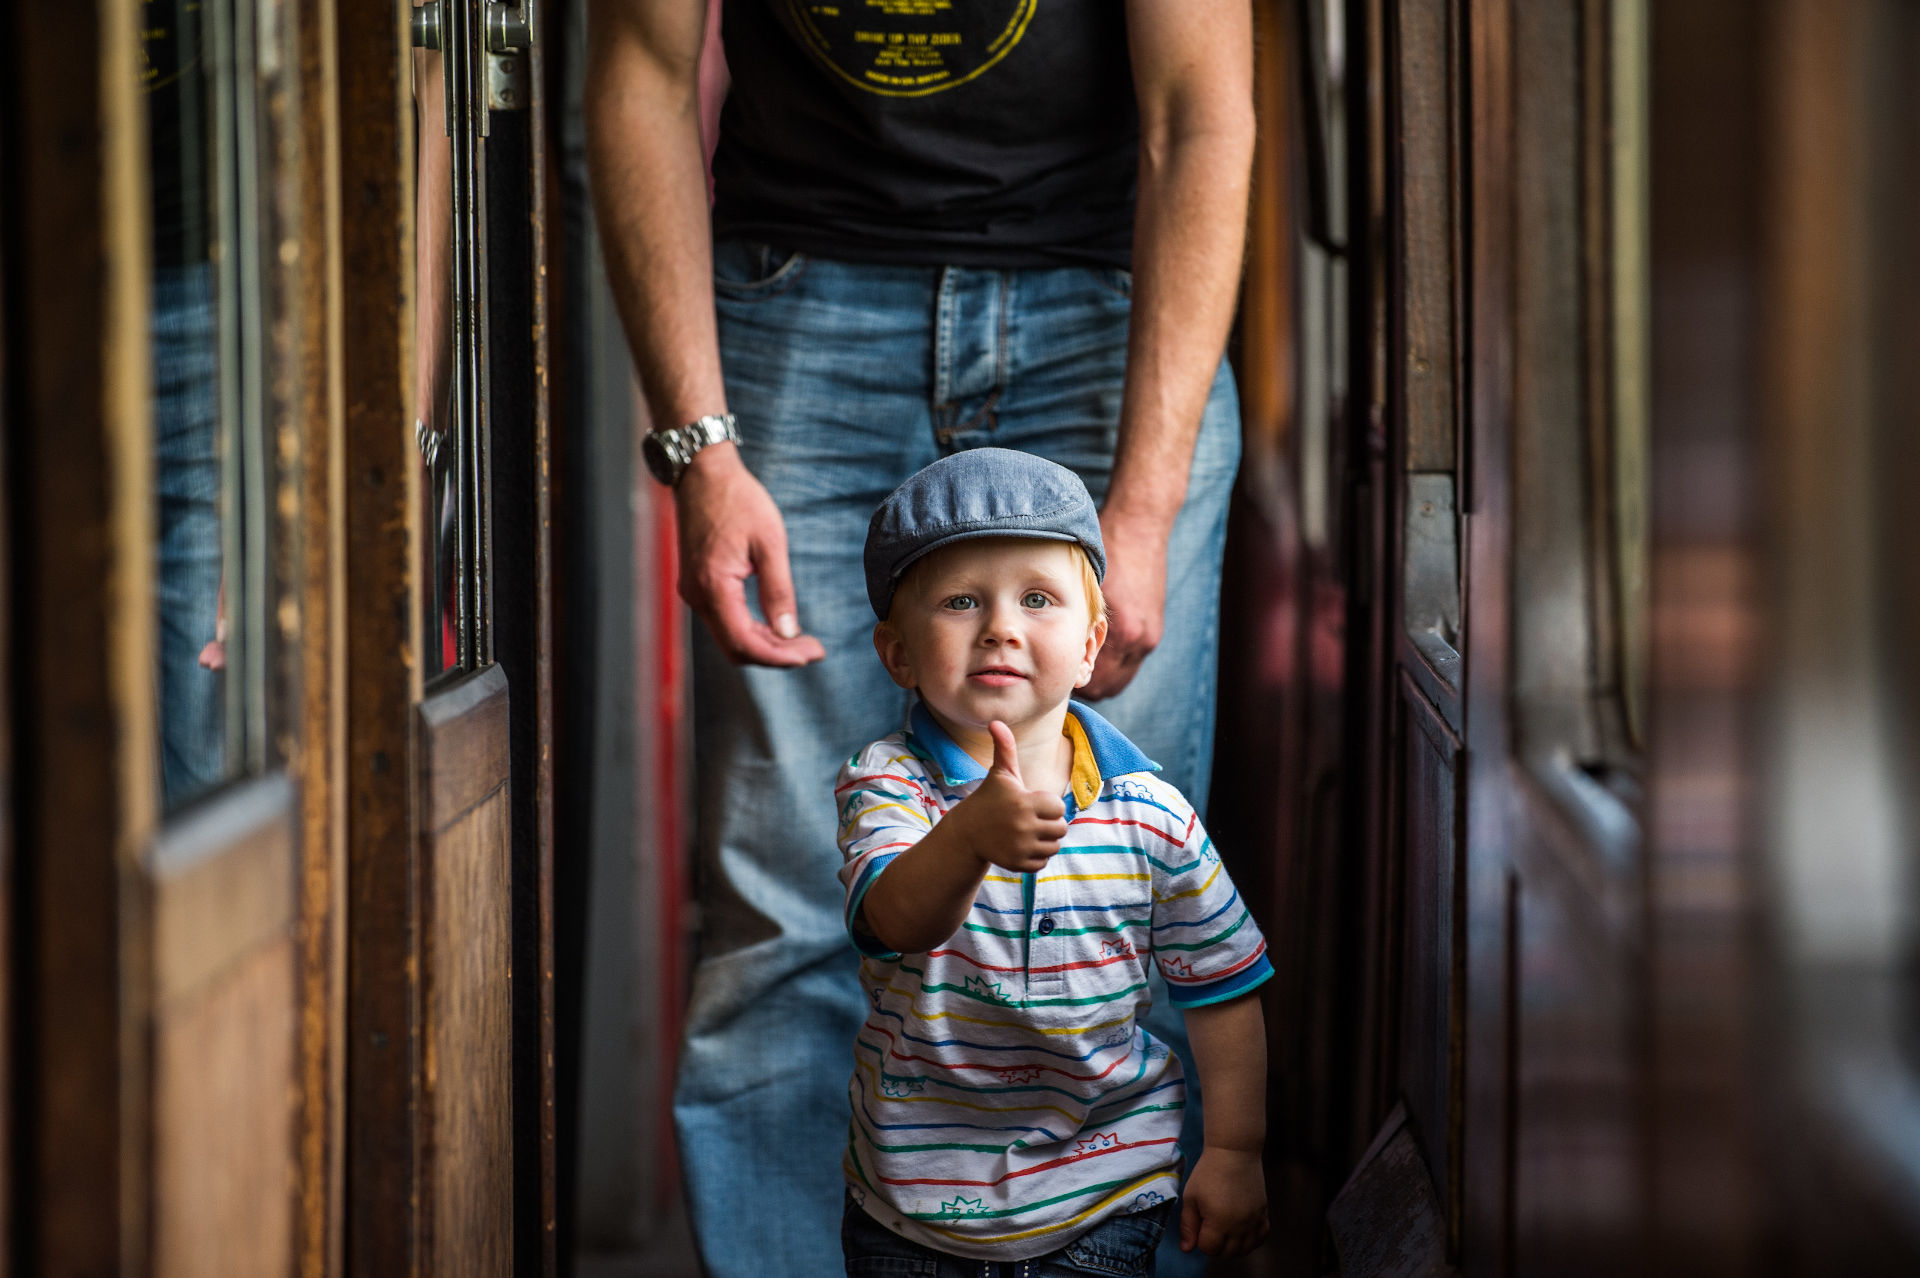 A young boy walks down a train corridor making a thumbs-up sign